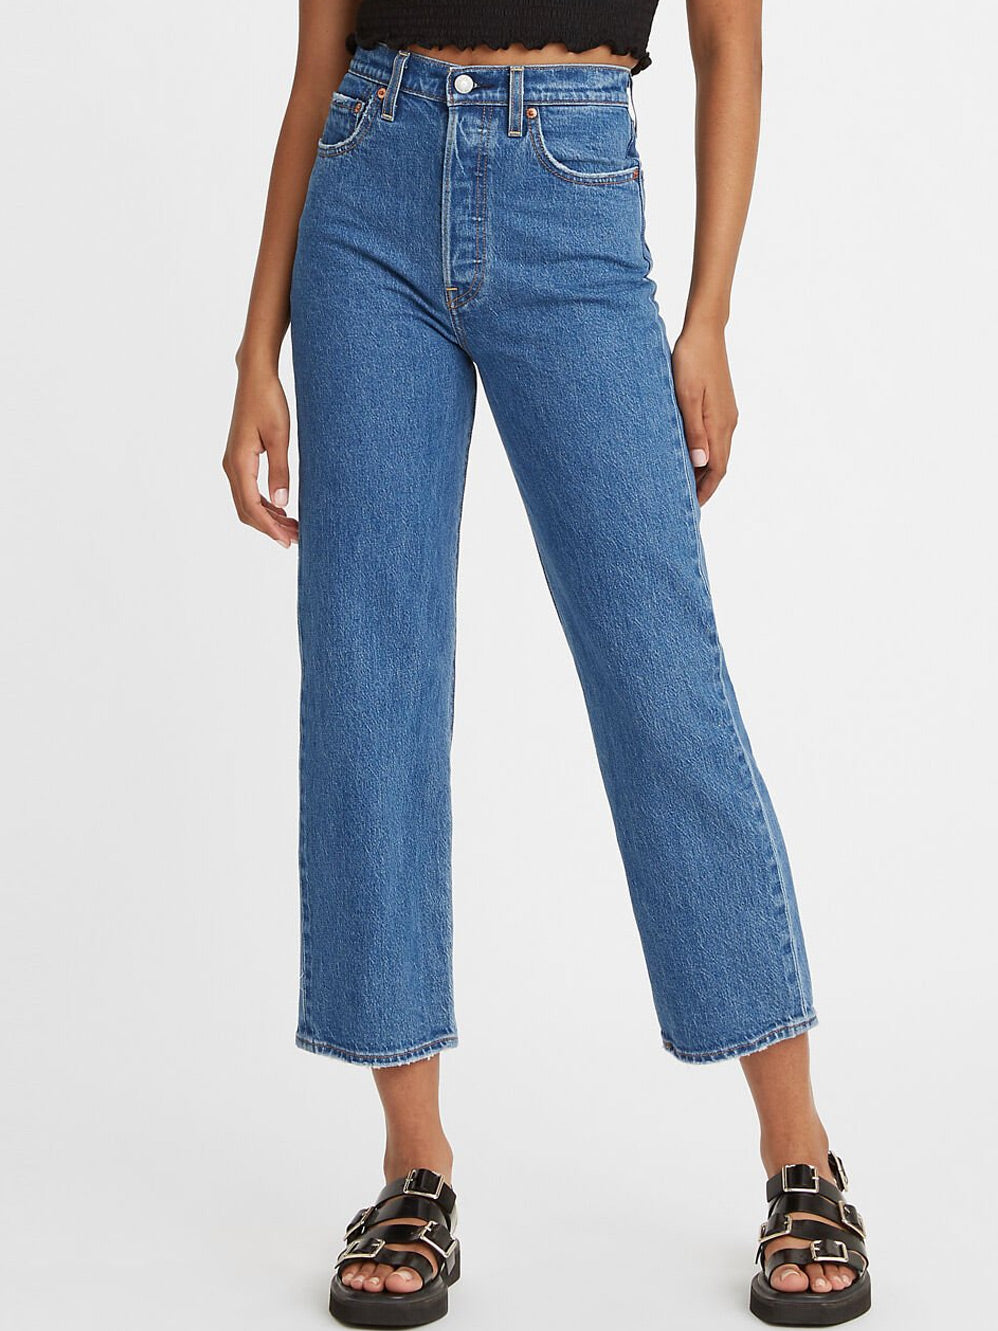 Jeans | Shop Women's High Rise & Skinny Jeans Online | ENNI